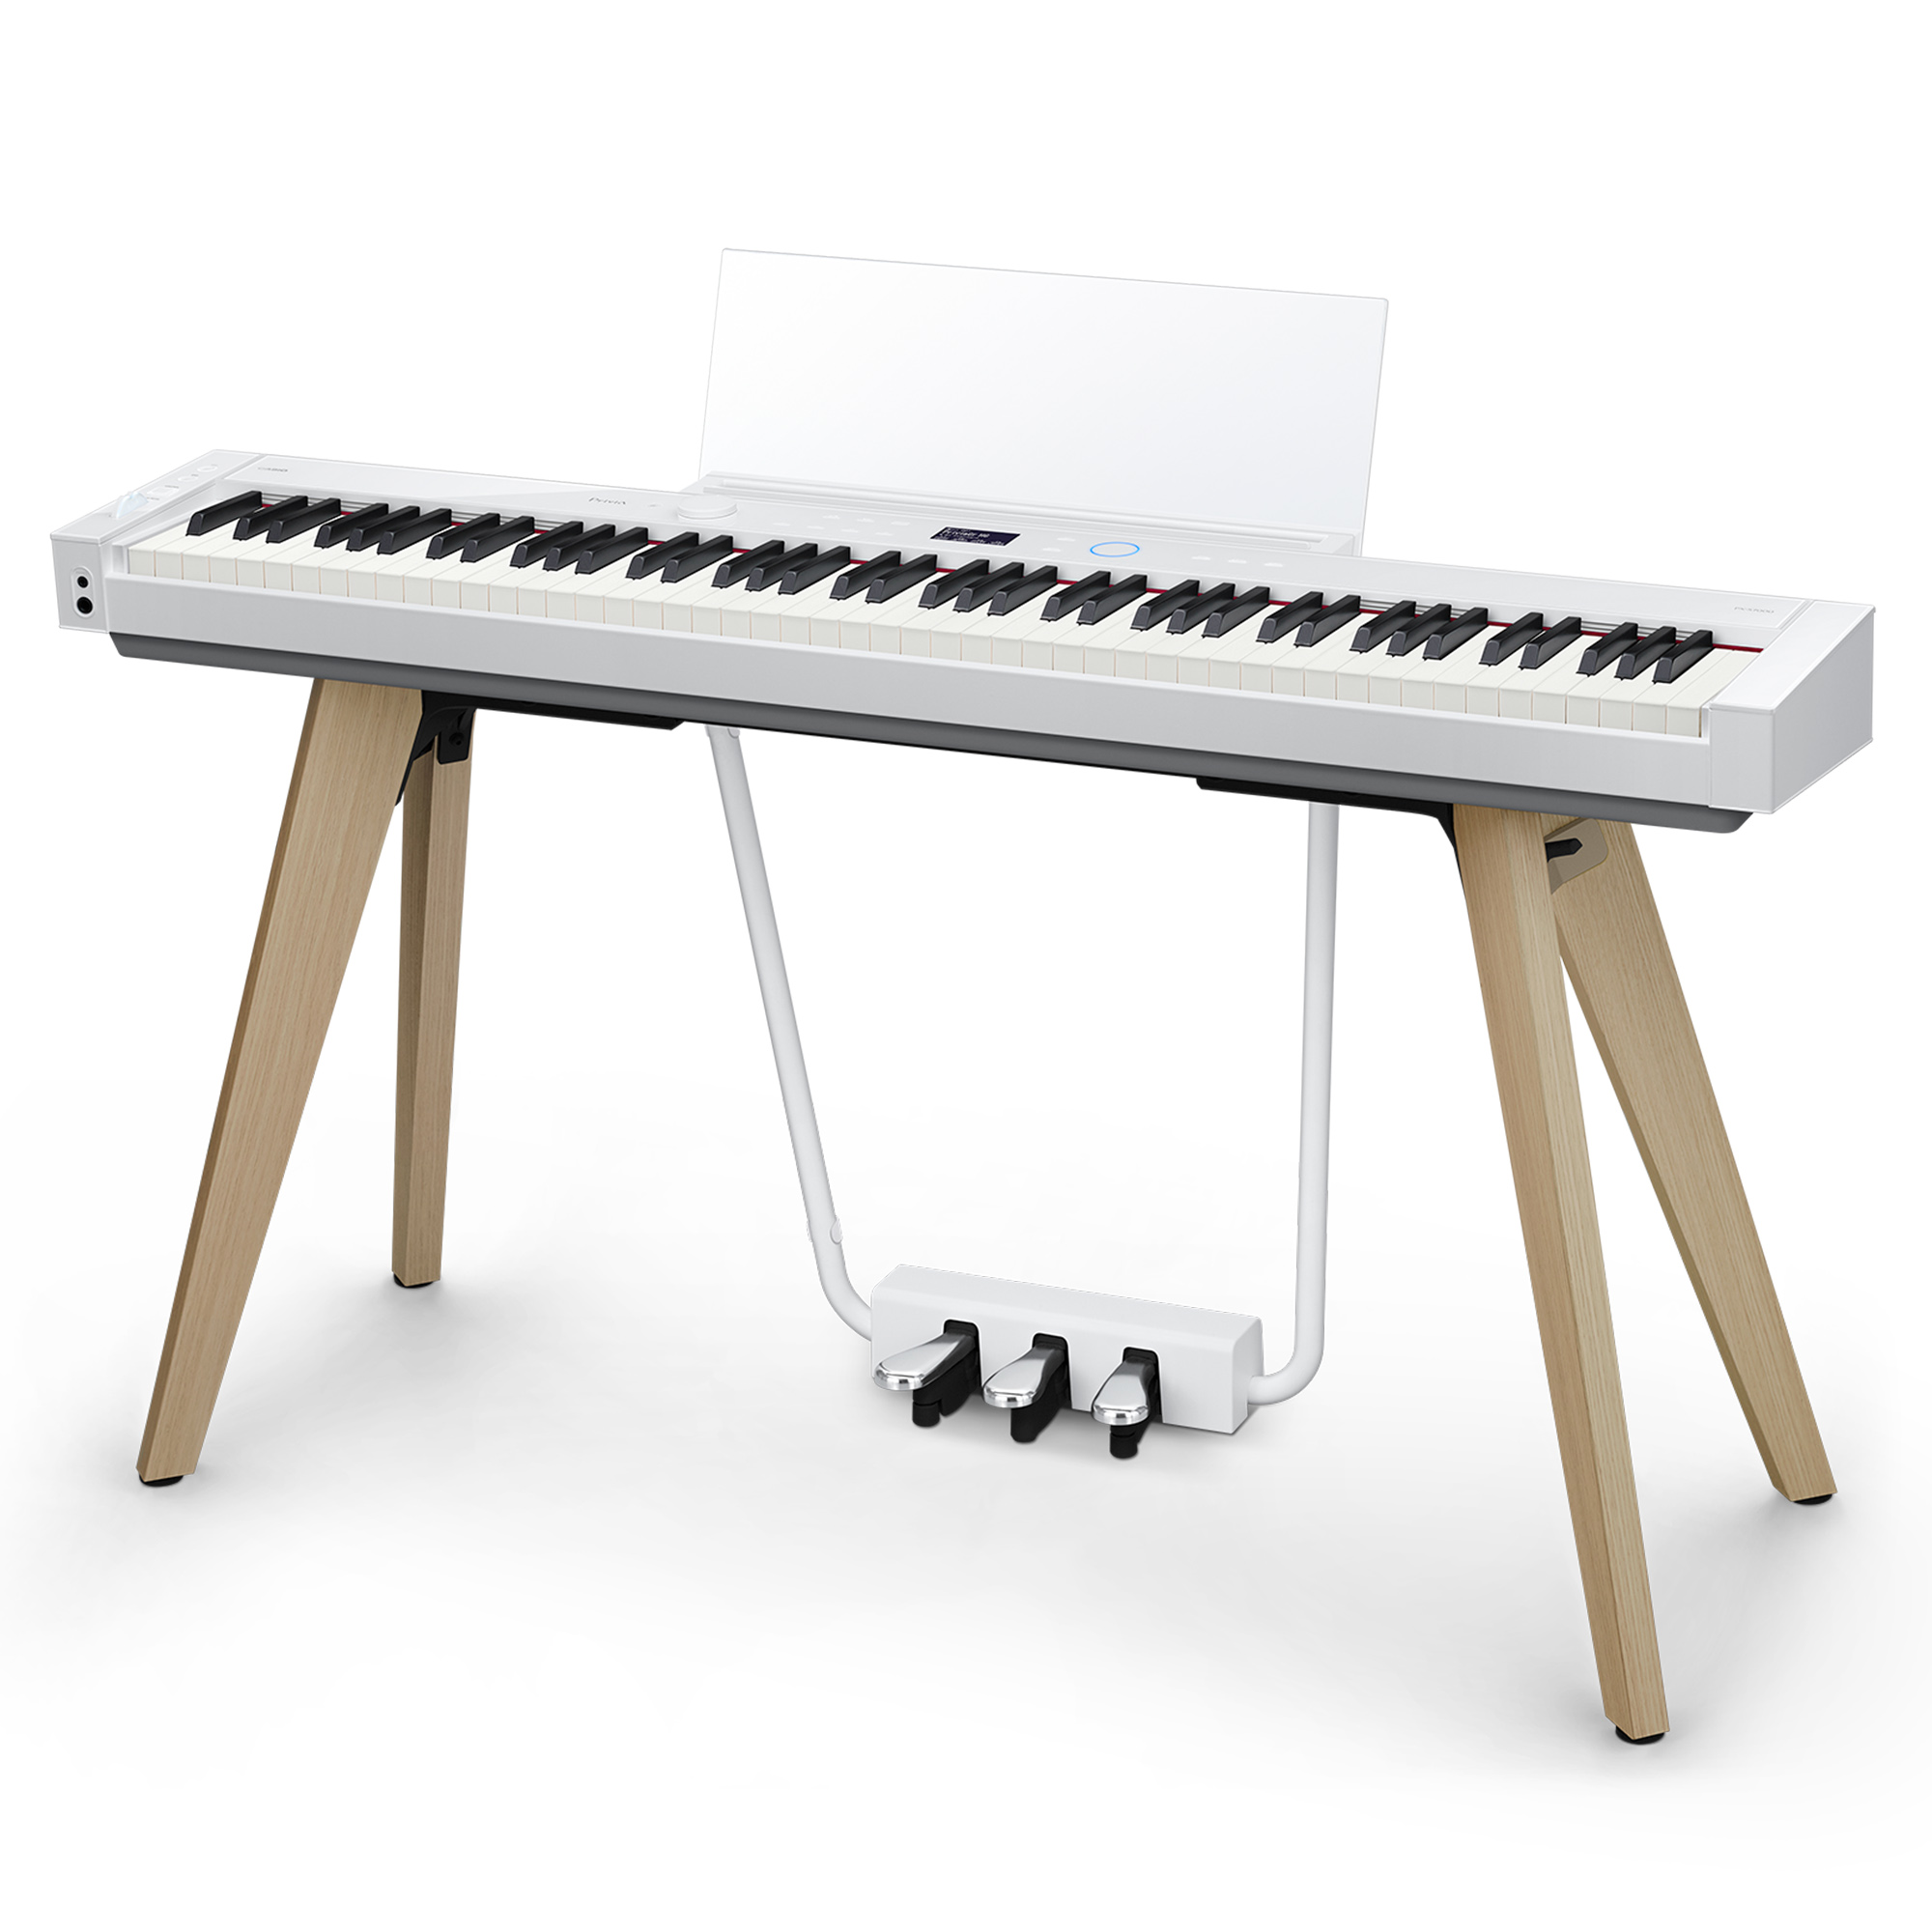 Produktiv Forretningsmand blæk Casio PX-S7000 Privia Slim Digital Piano - White 79767362690 | eBay